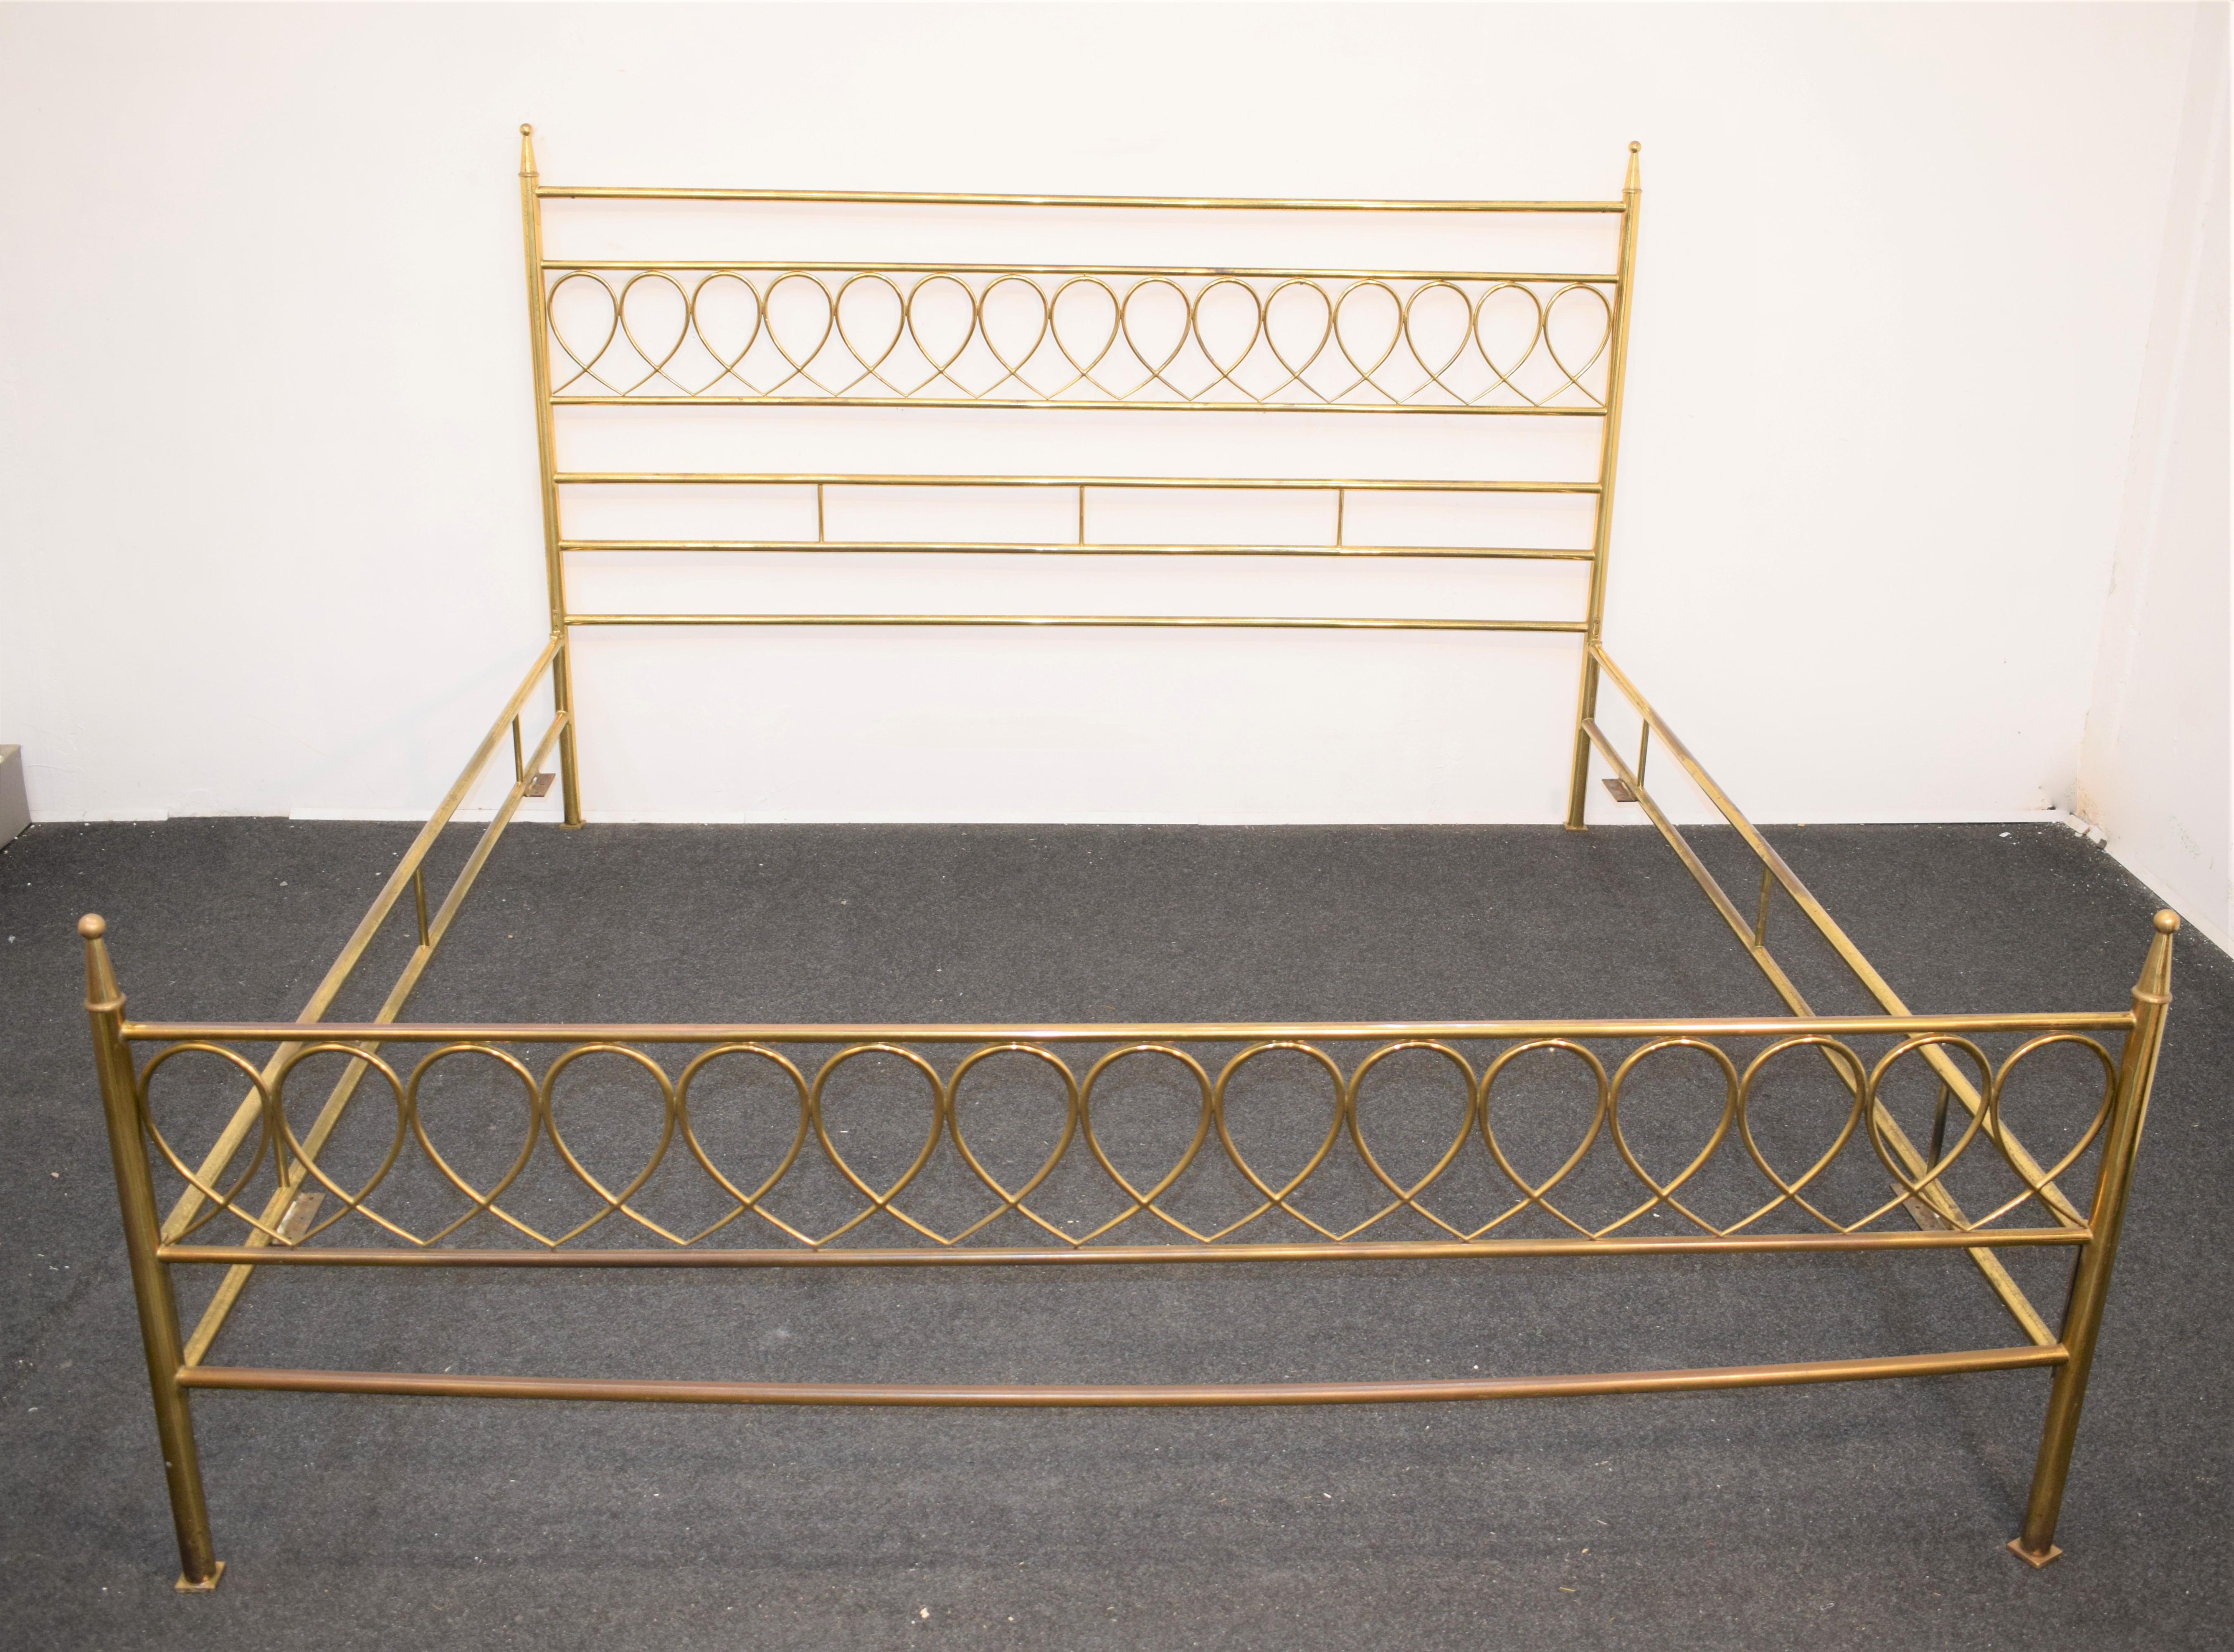 Italian brass queen bed, 1950s.
Dimensions of mattress: 200 x 175 cm.